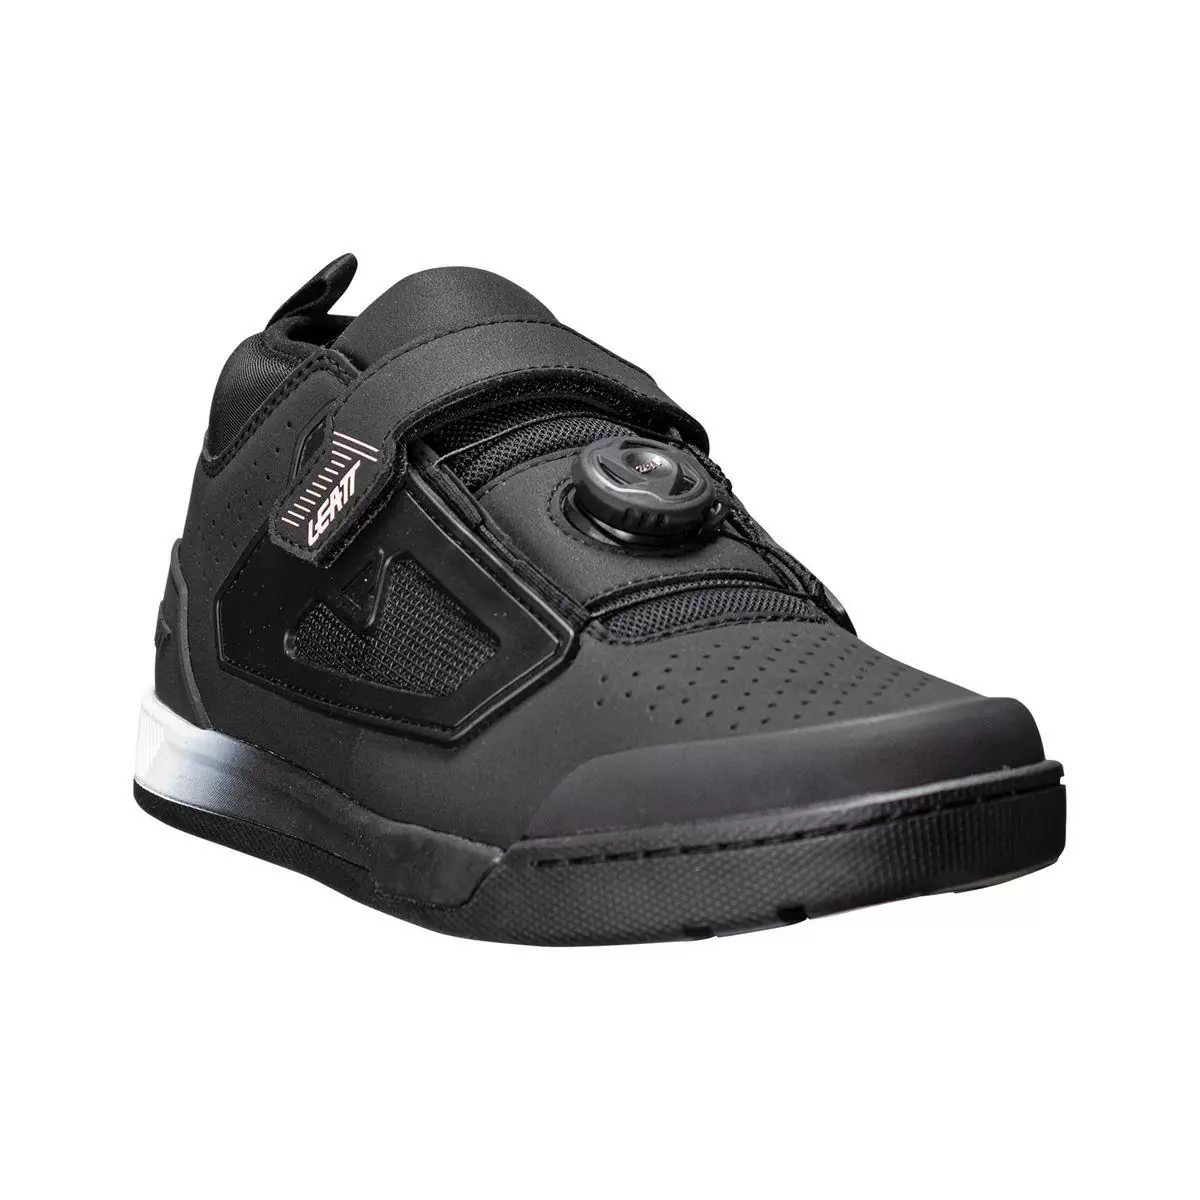 Chaussures VTT Pro Flat 3.0 noir taille 38,5 - image